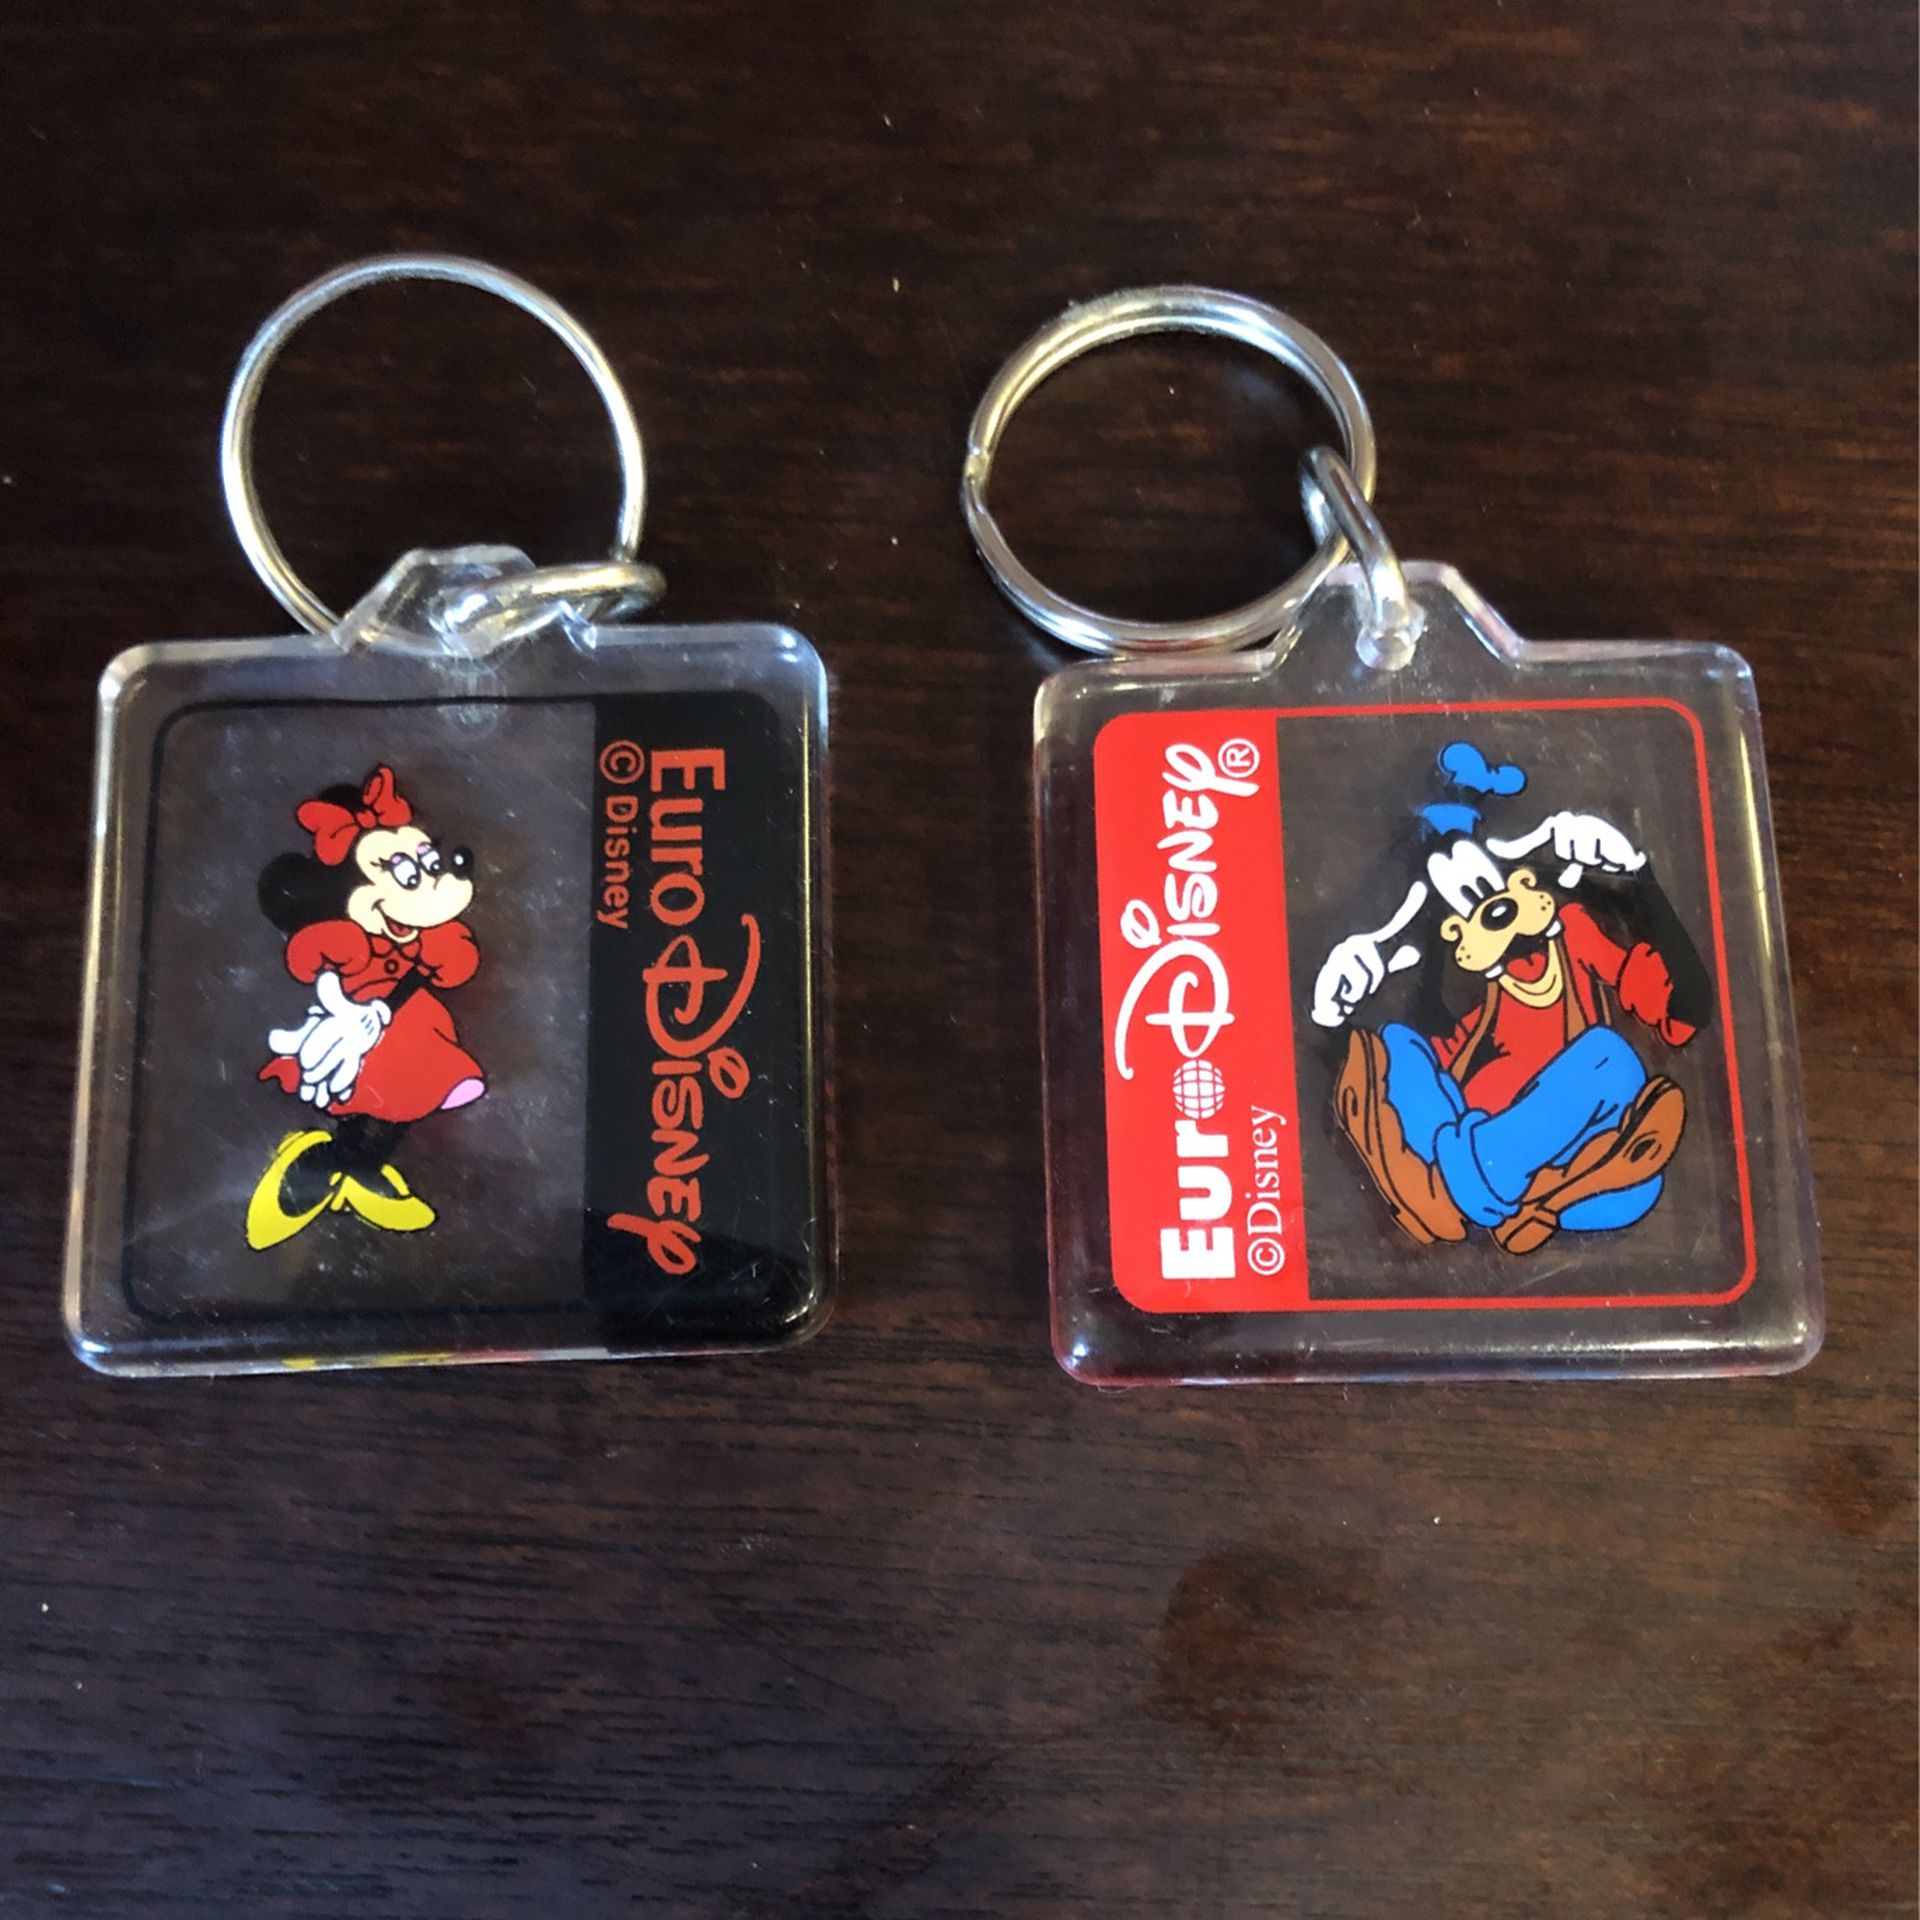 EURO DISNEY Keychain Lot Of 2. Minnie And Pluto